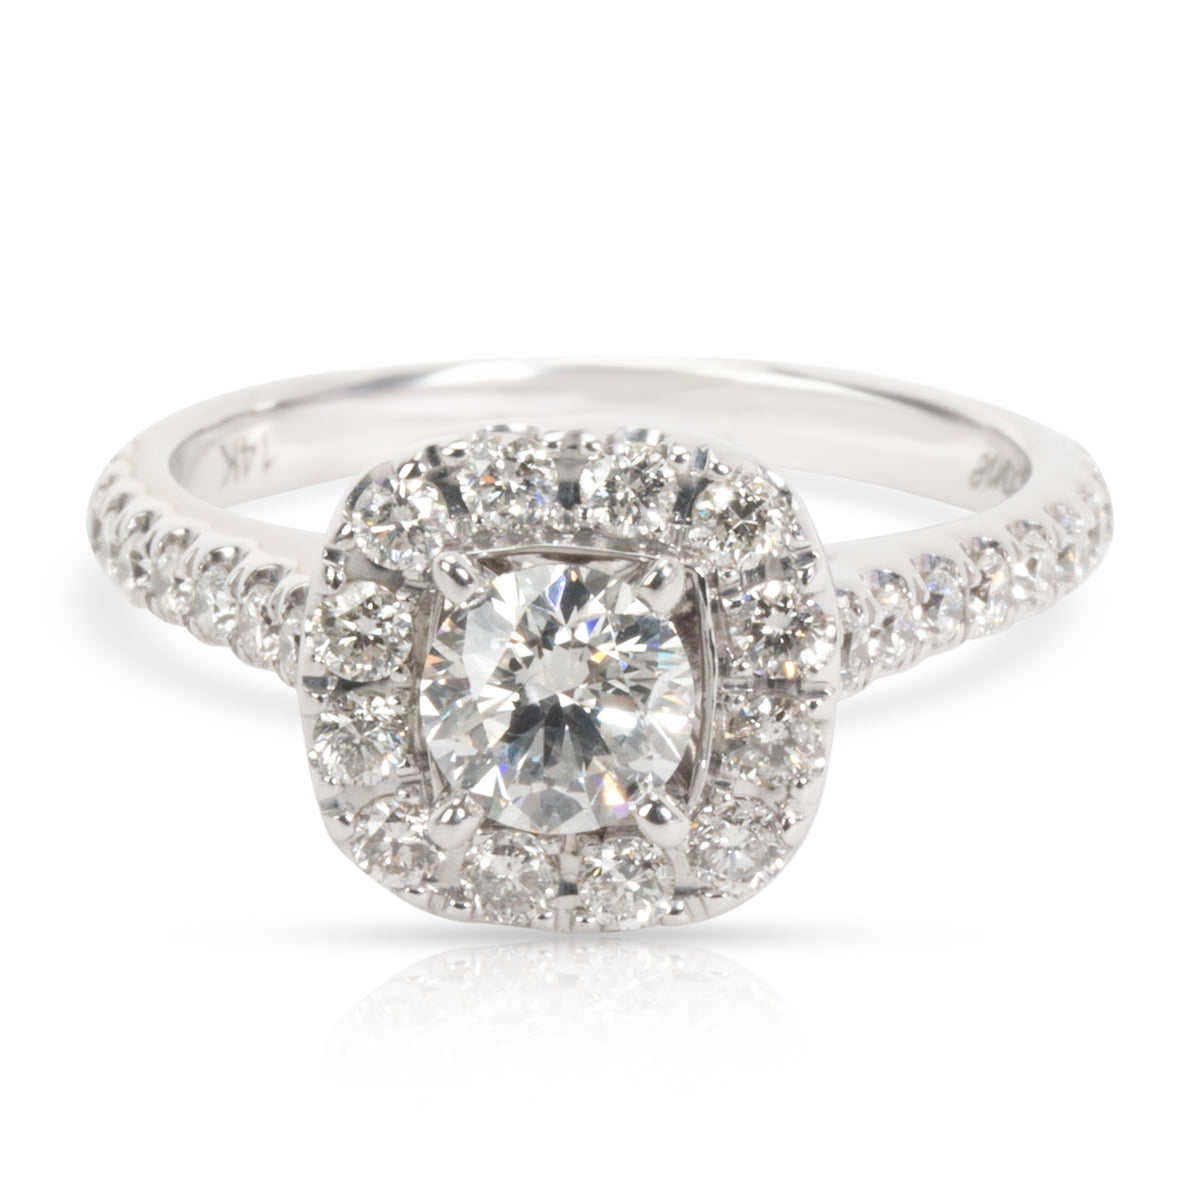 Neil Lane Halo Diamond Engagement Ring in 14K White Gold 1 1/8 CTW